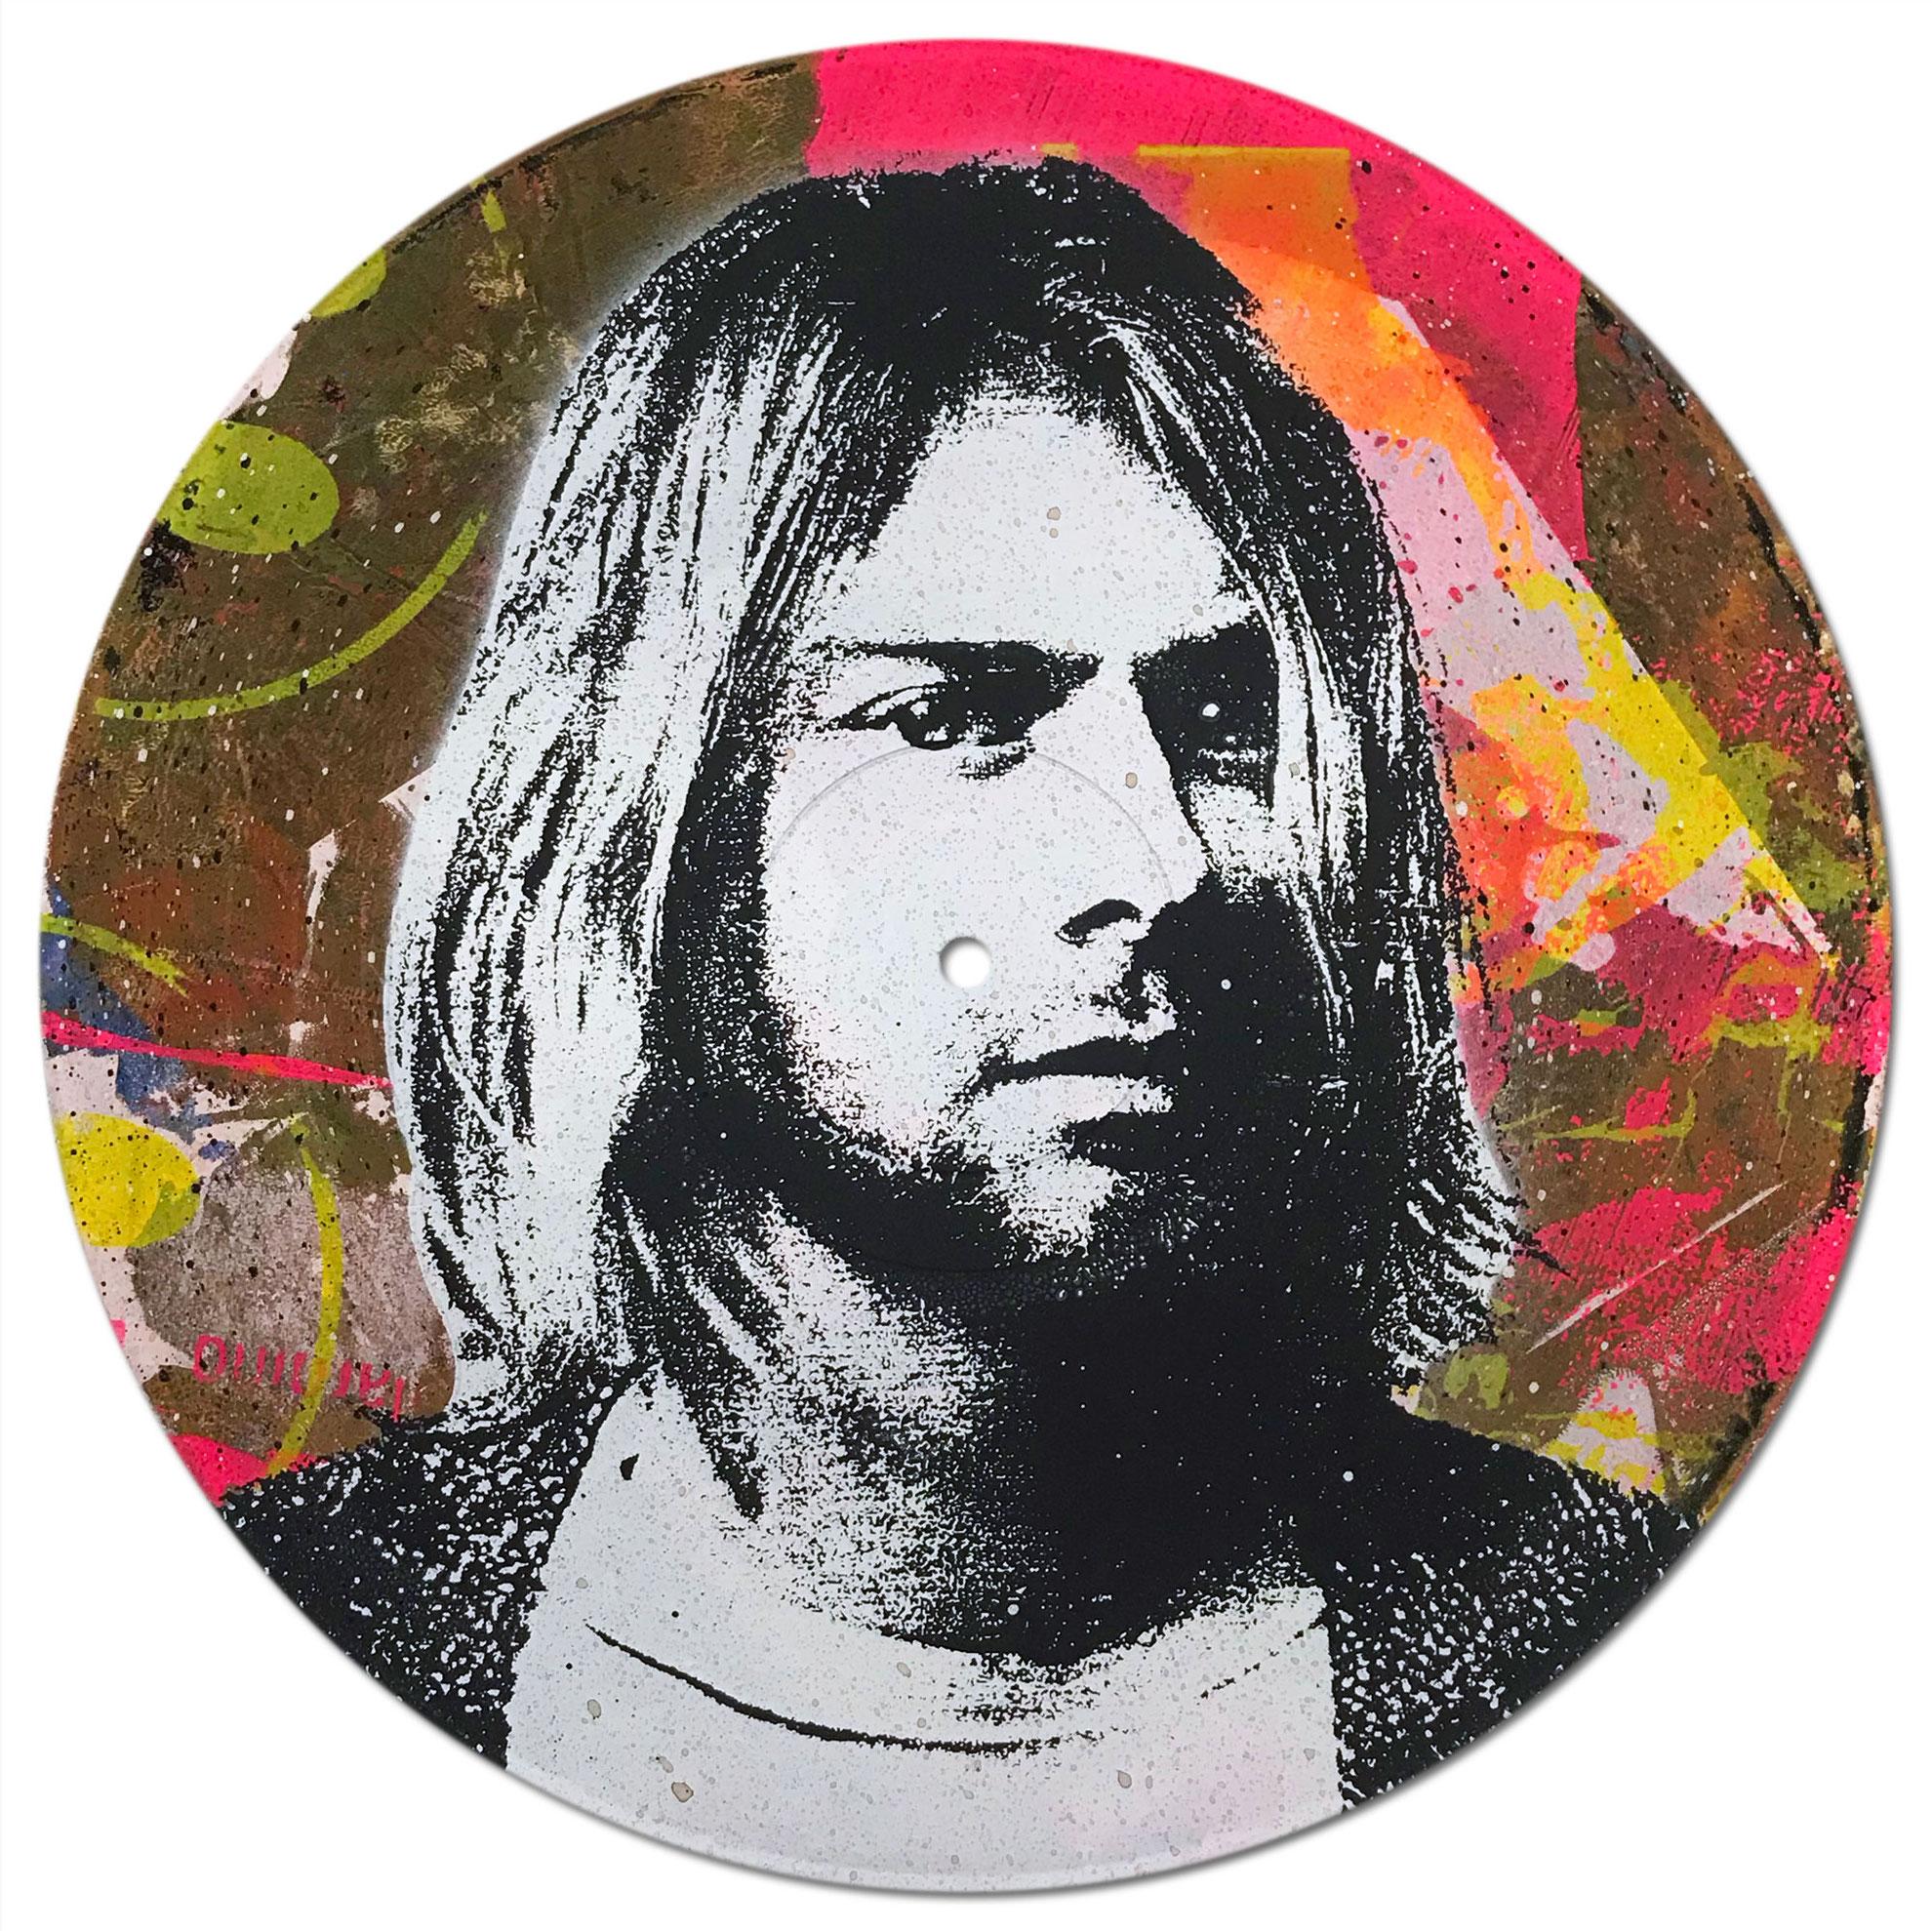 Kurt Cobain Vinyl 1-10, Greg Gossel Pop Art LP Record (Singles & Sets Available) For Sale 7